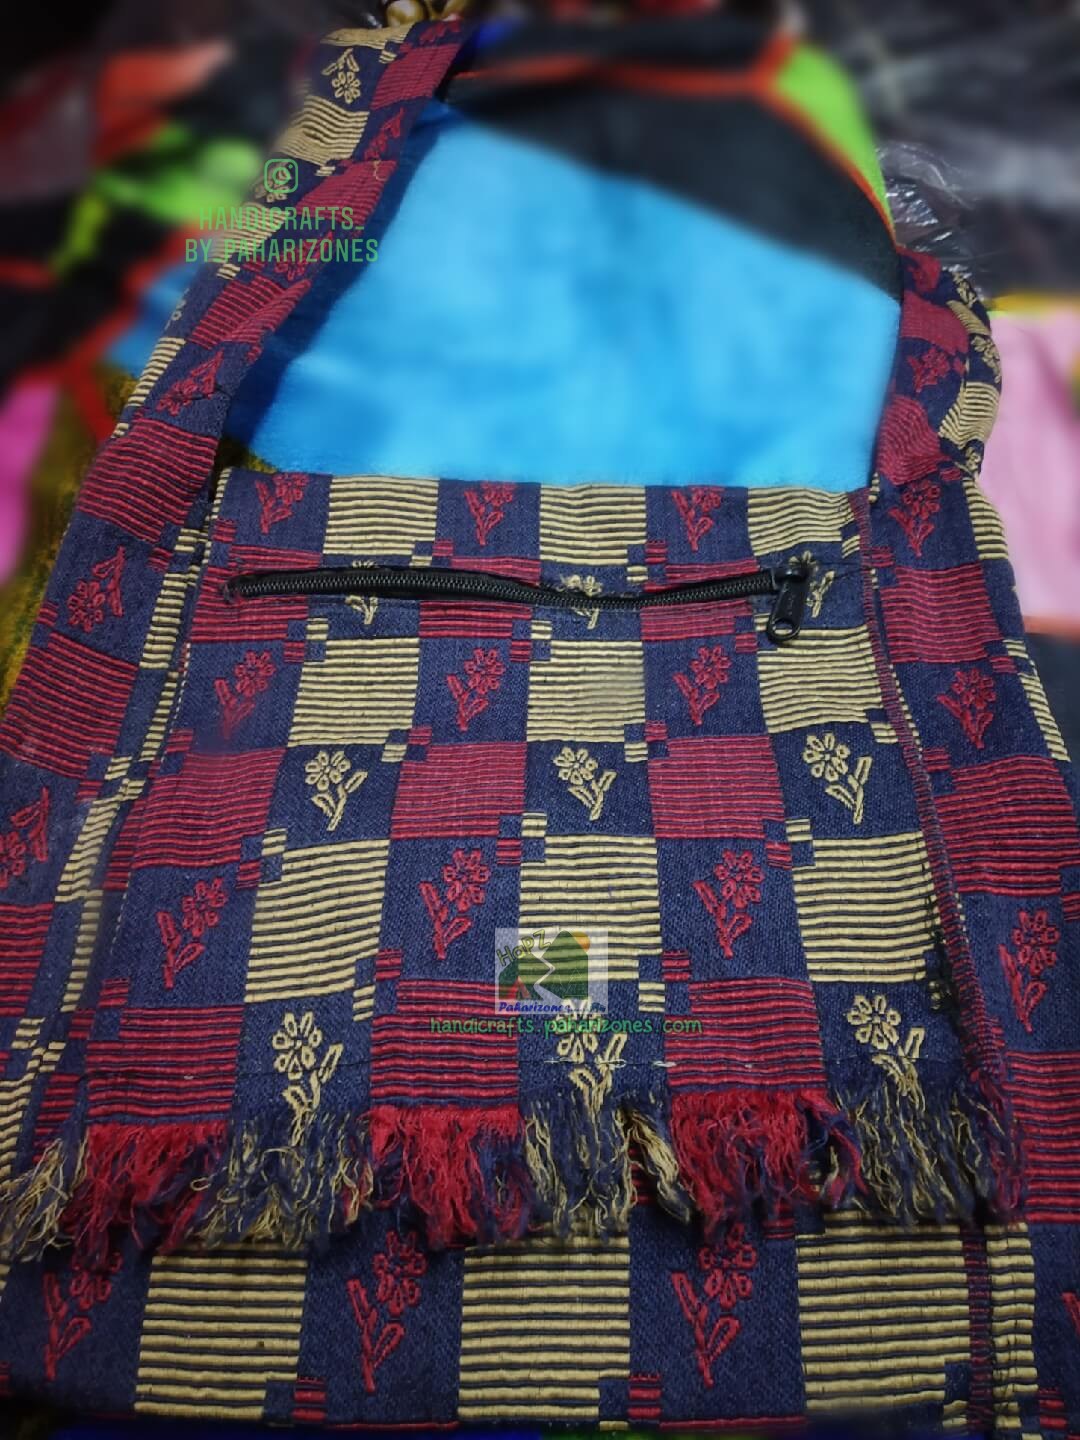 cloth bag Multicolor Handicraft Handbags For Women, Size: Medium at Rs 200/ bag in Ghaziabad